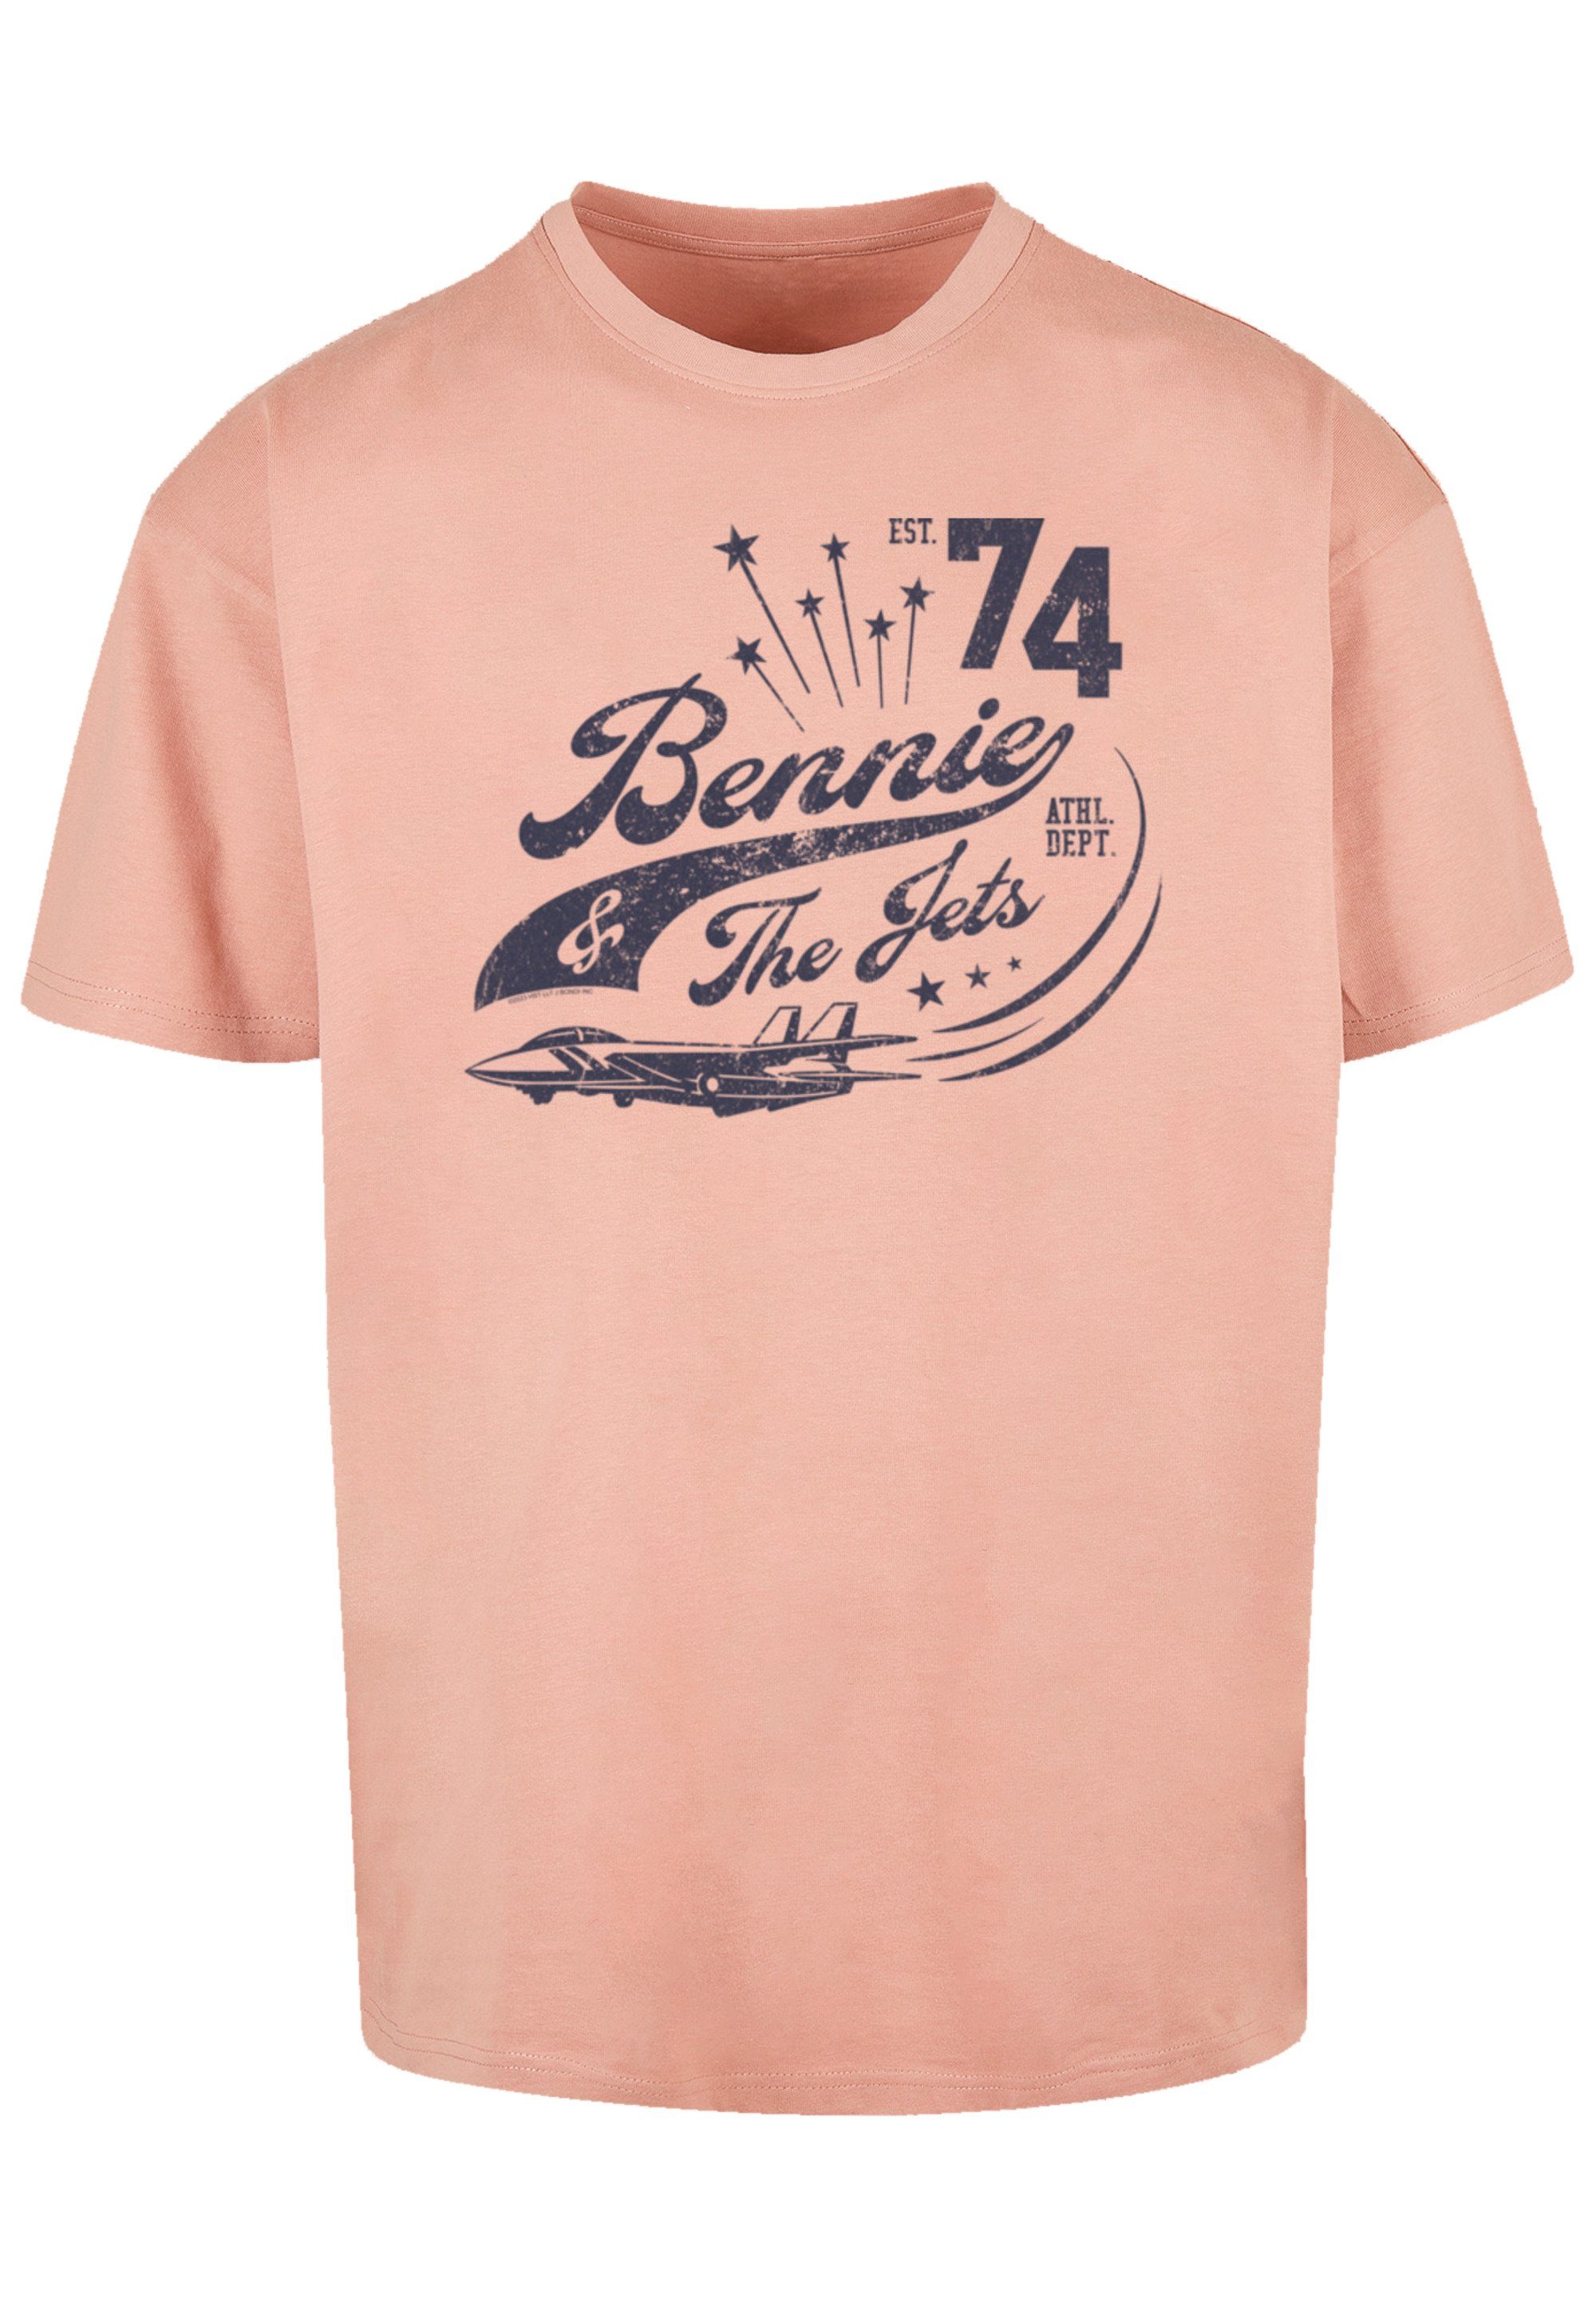 The T-Shirt And Jets Musik, F4NT4STIC Bennie John Elton amber Band, Logo